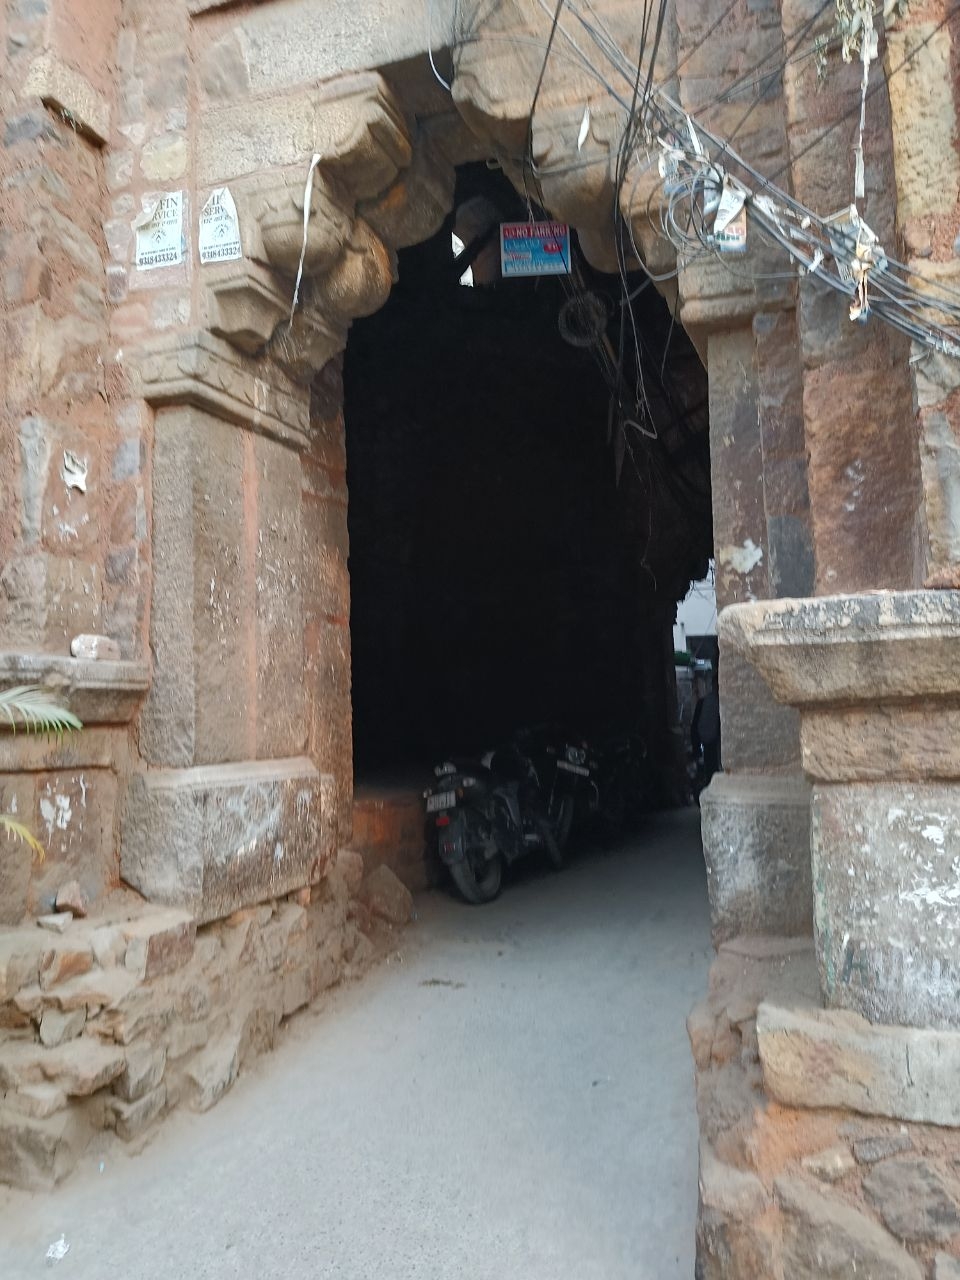 Гробница Катвария Сарай Дели, Индия